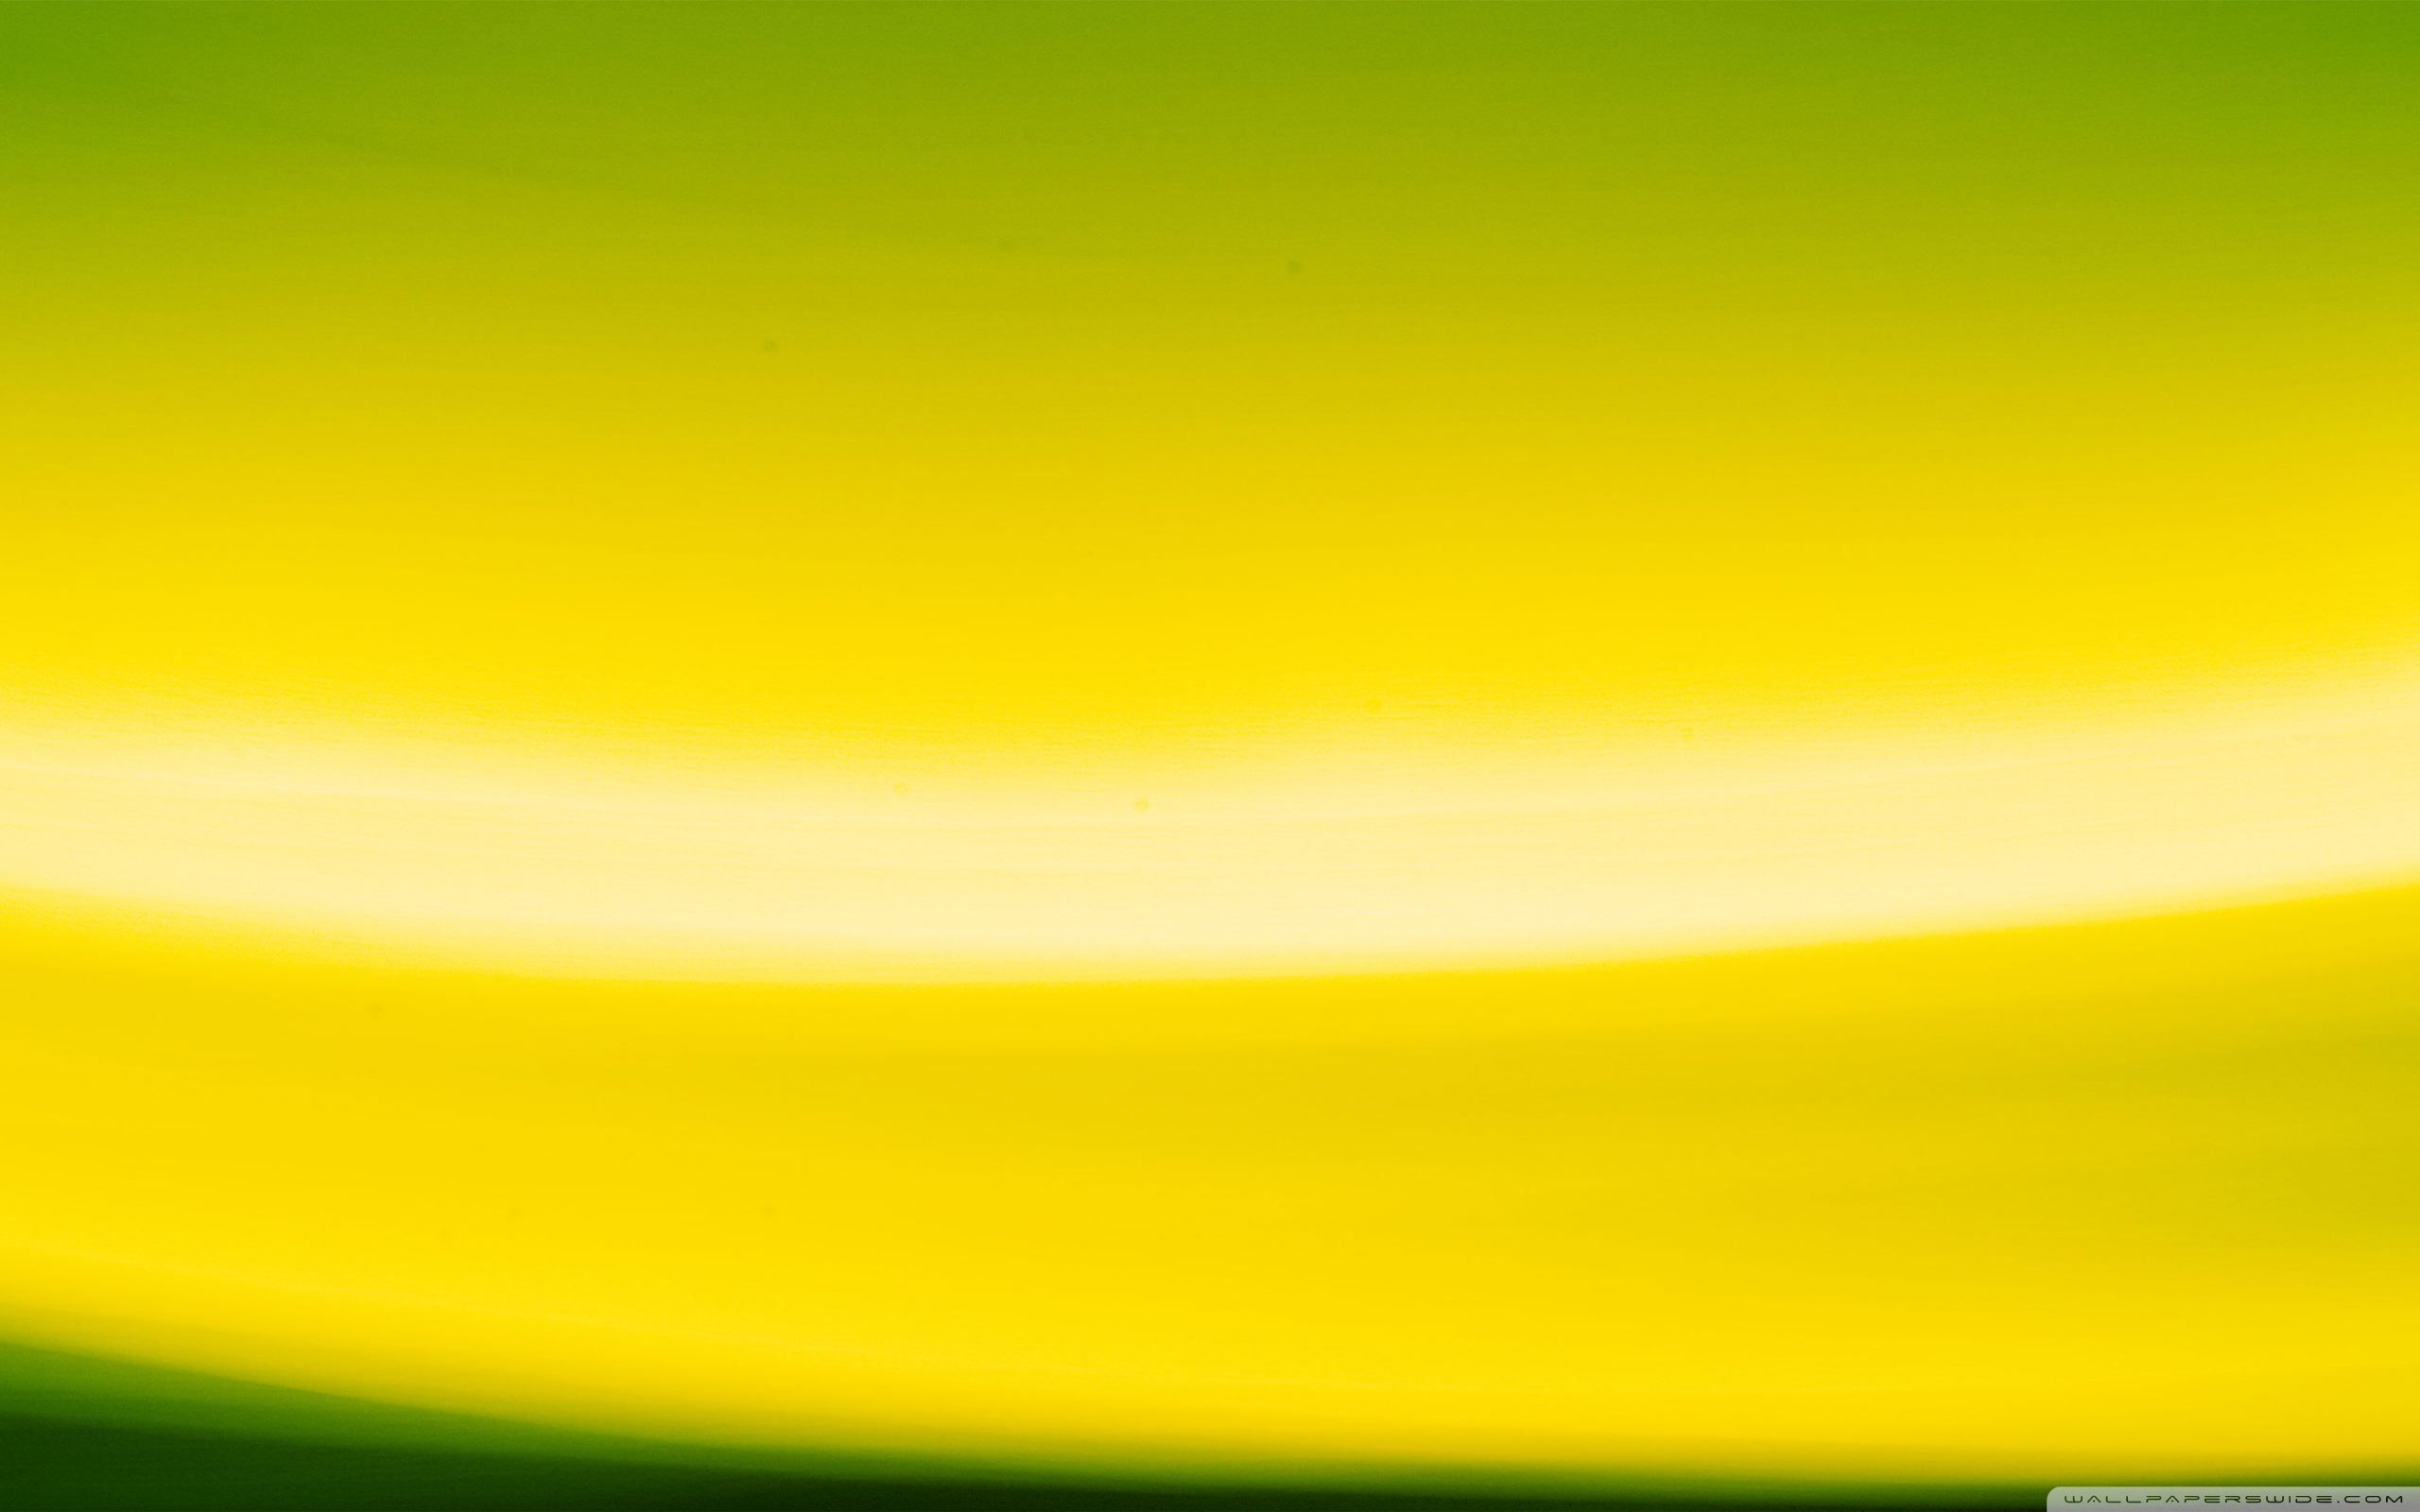 Abstract Yellow And Green Ultra HD Desktop Background Wallpaper for 4K UHD TV, Widescreen & UltraWide Desktop & Laptop, Tablet